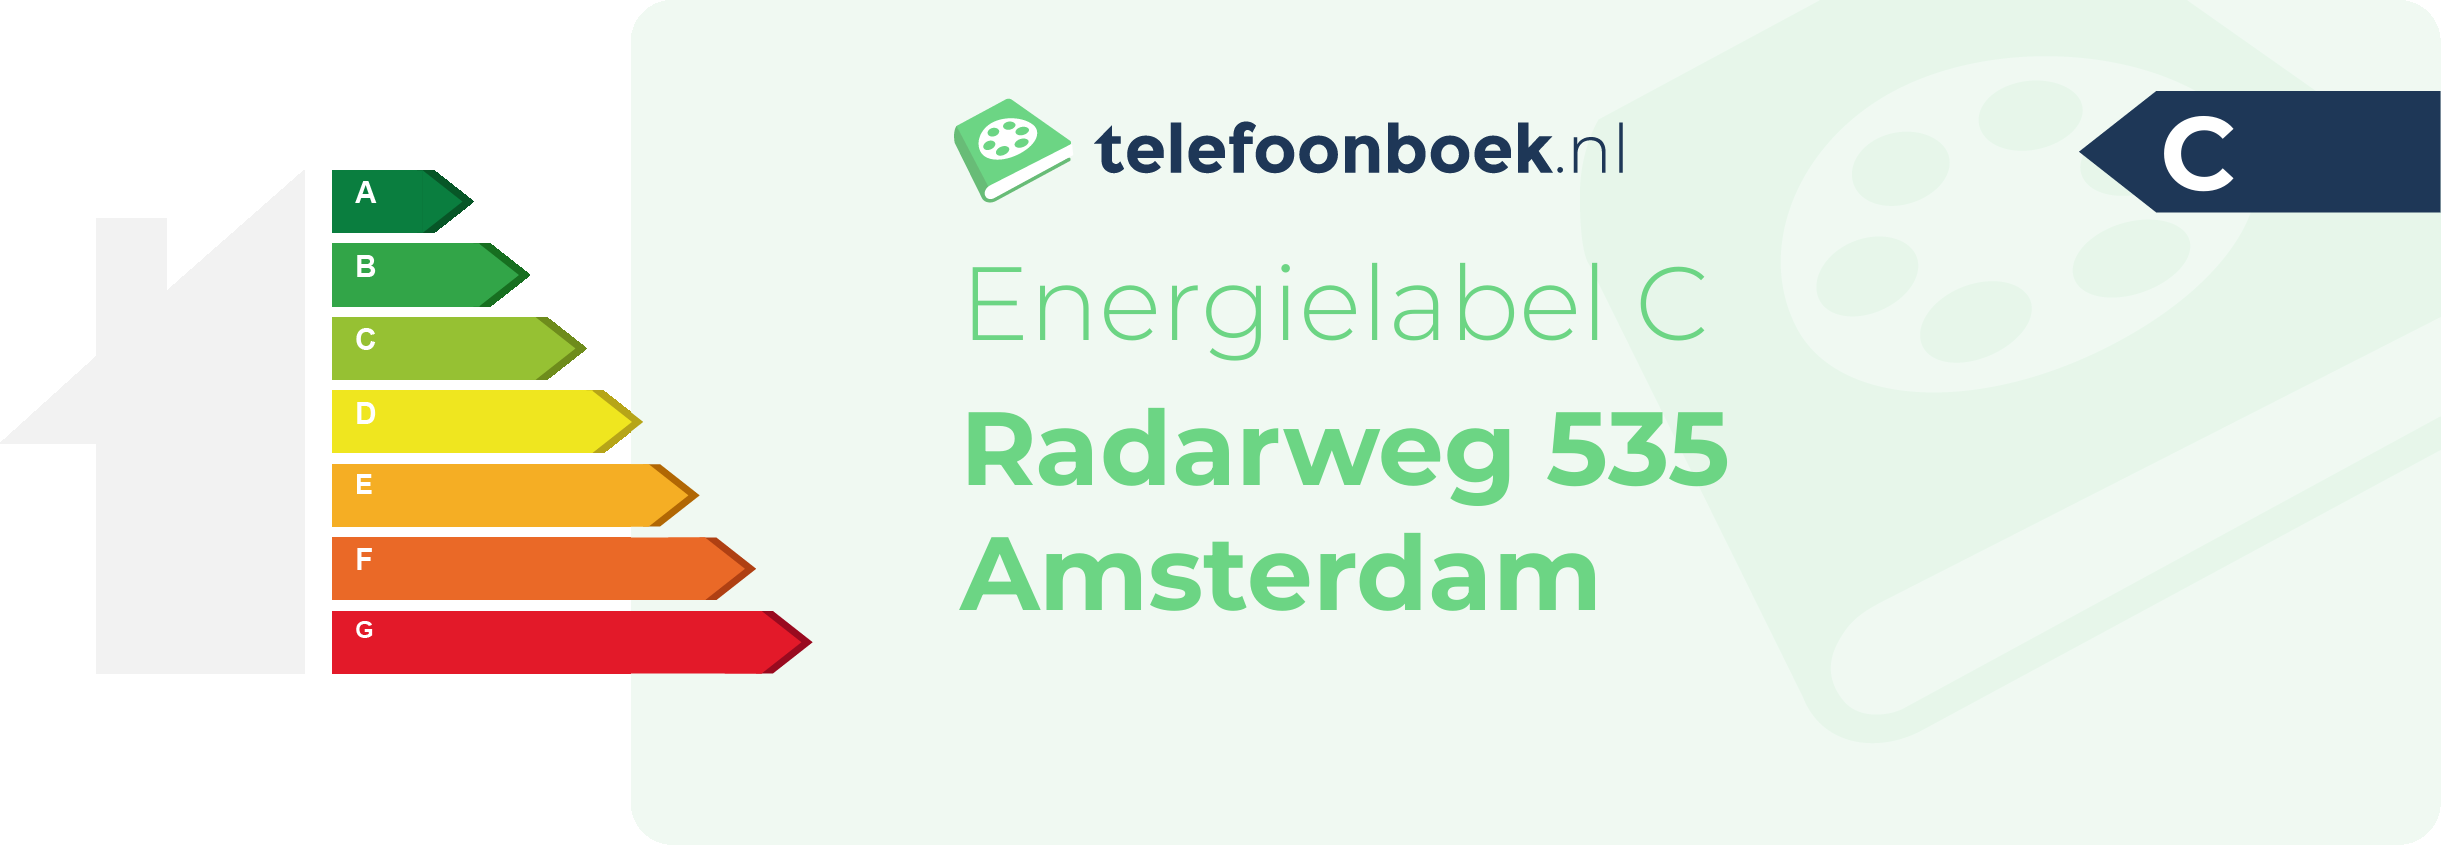 Energielabel Radarweg 535 Amsterdam